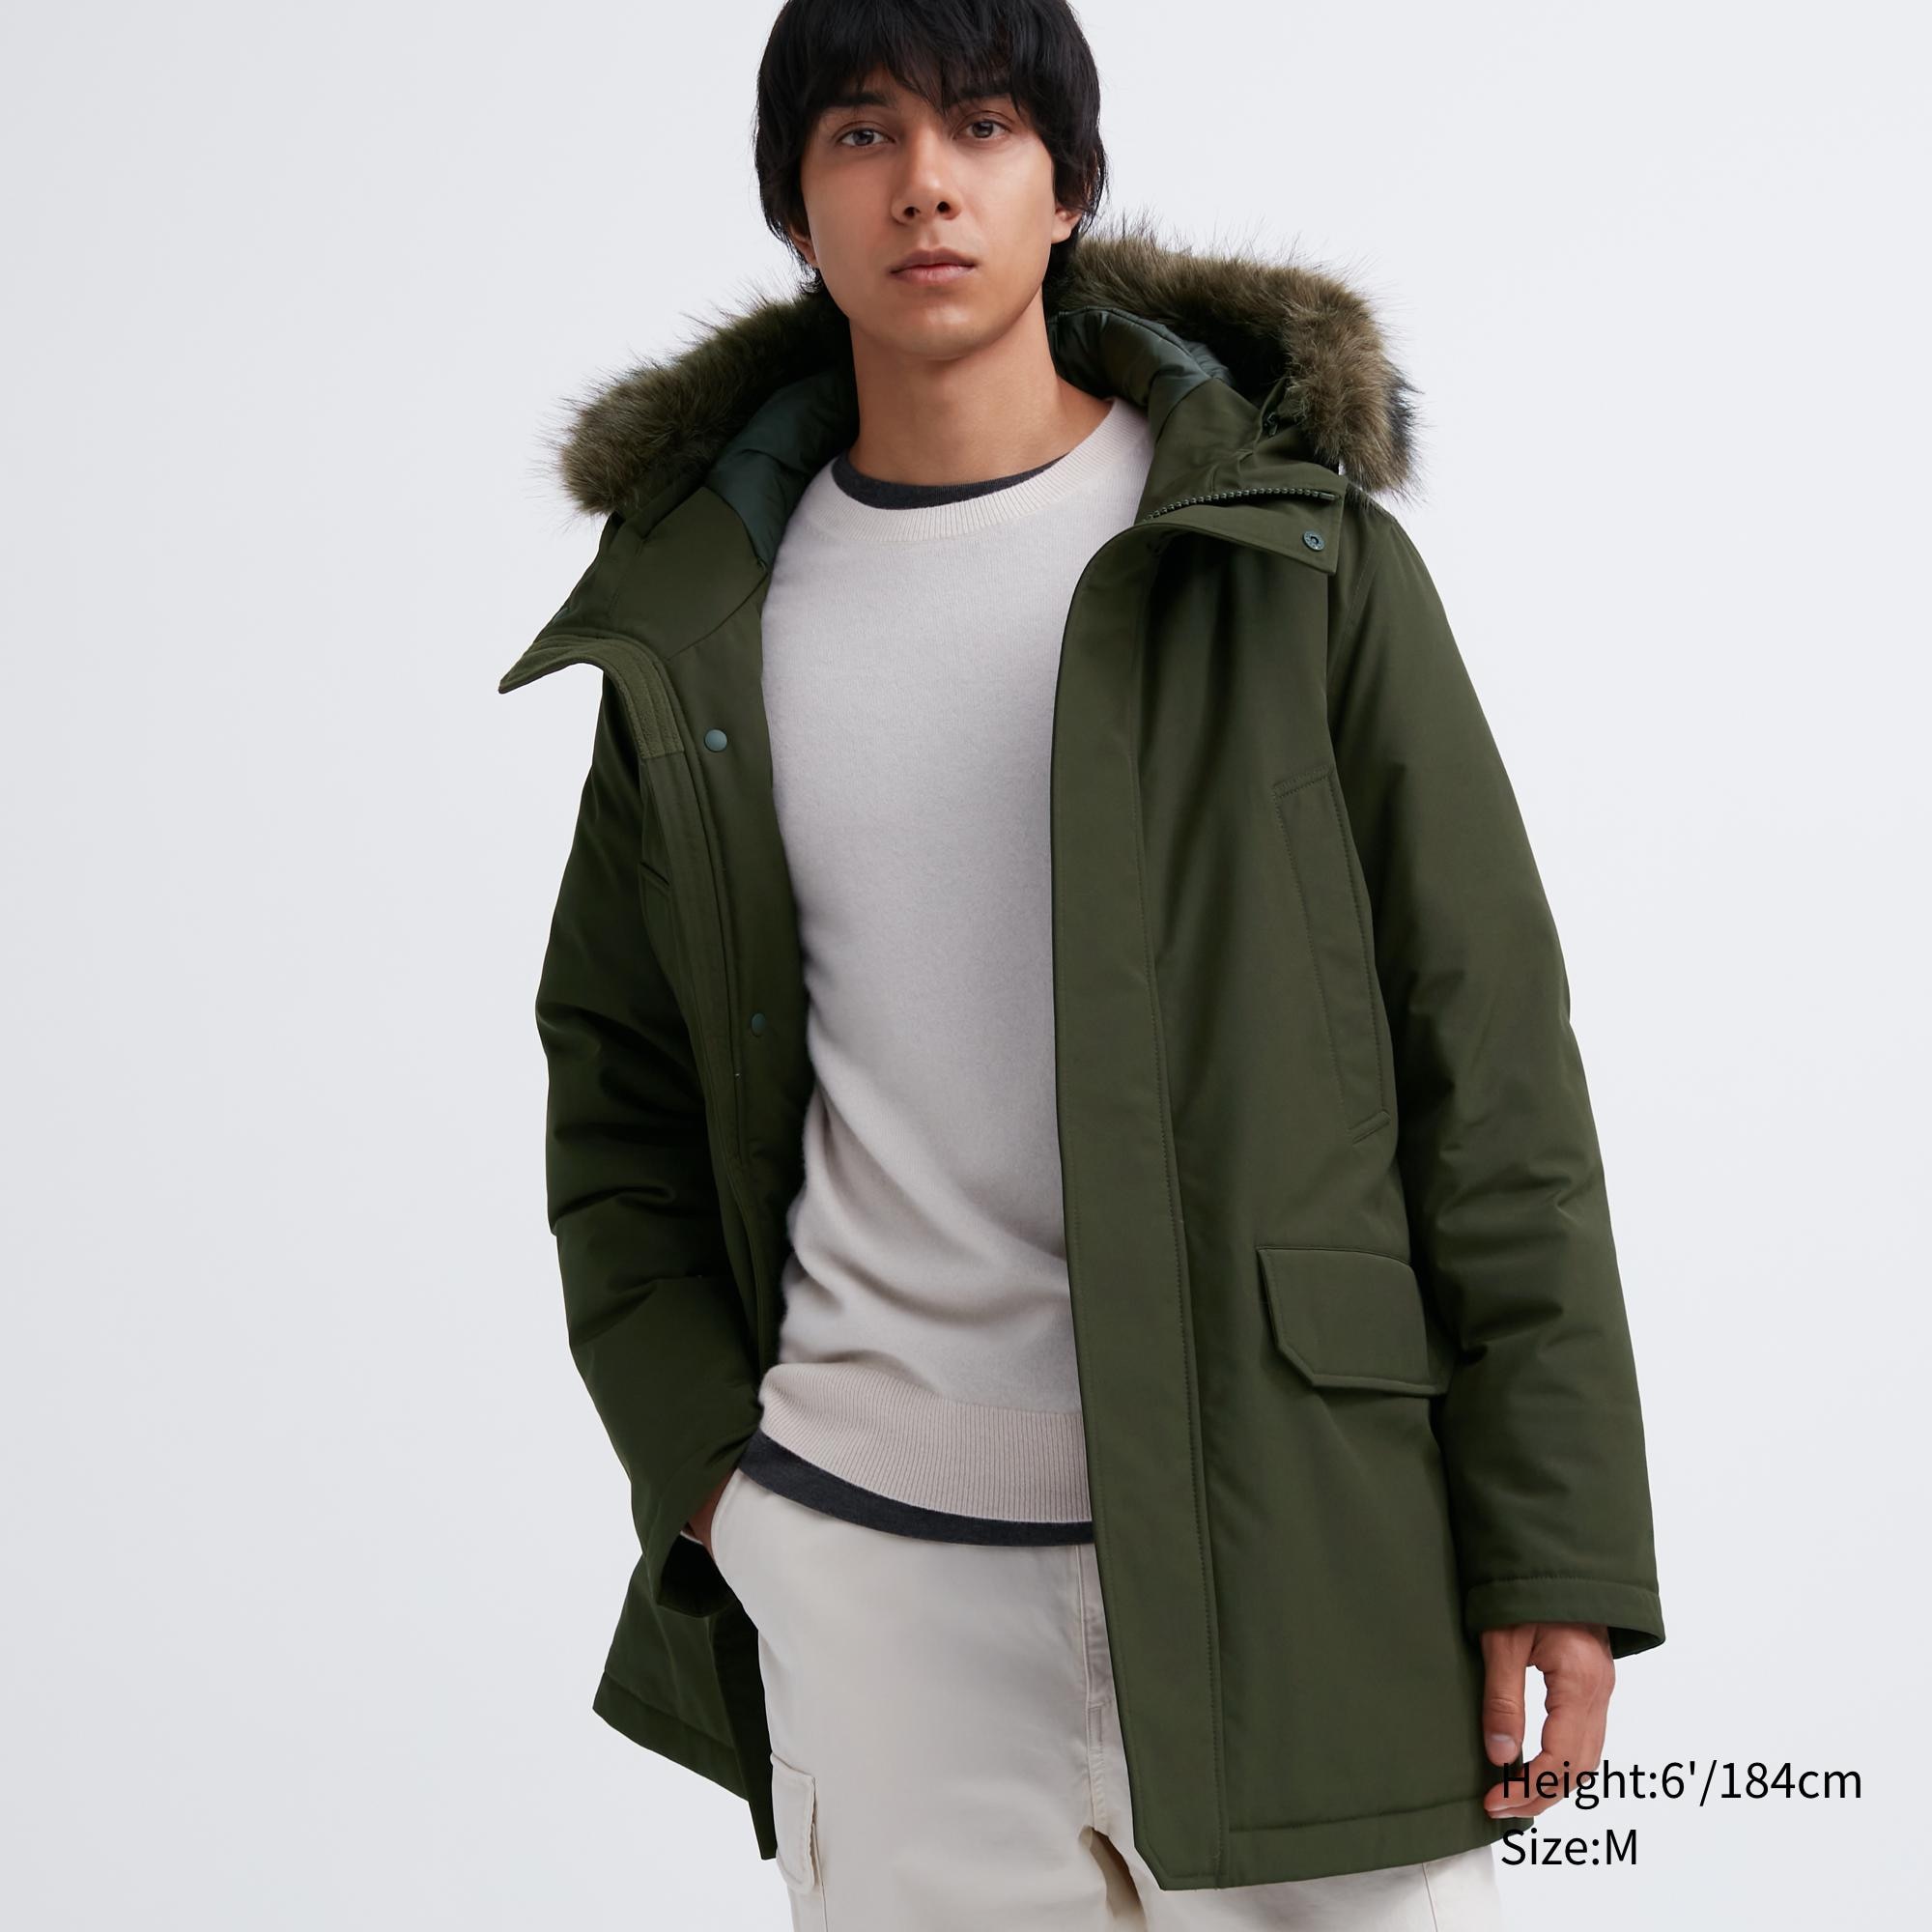 Uniqlo, Jackets & Coats, Uniqlo Lightweight Cotton Jersey Bomber Jacket  Size S Small Dark Olive Green